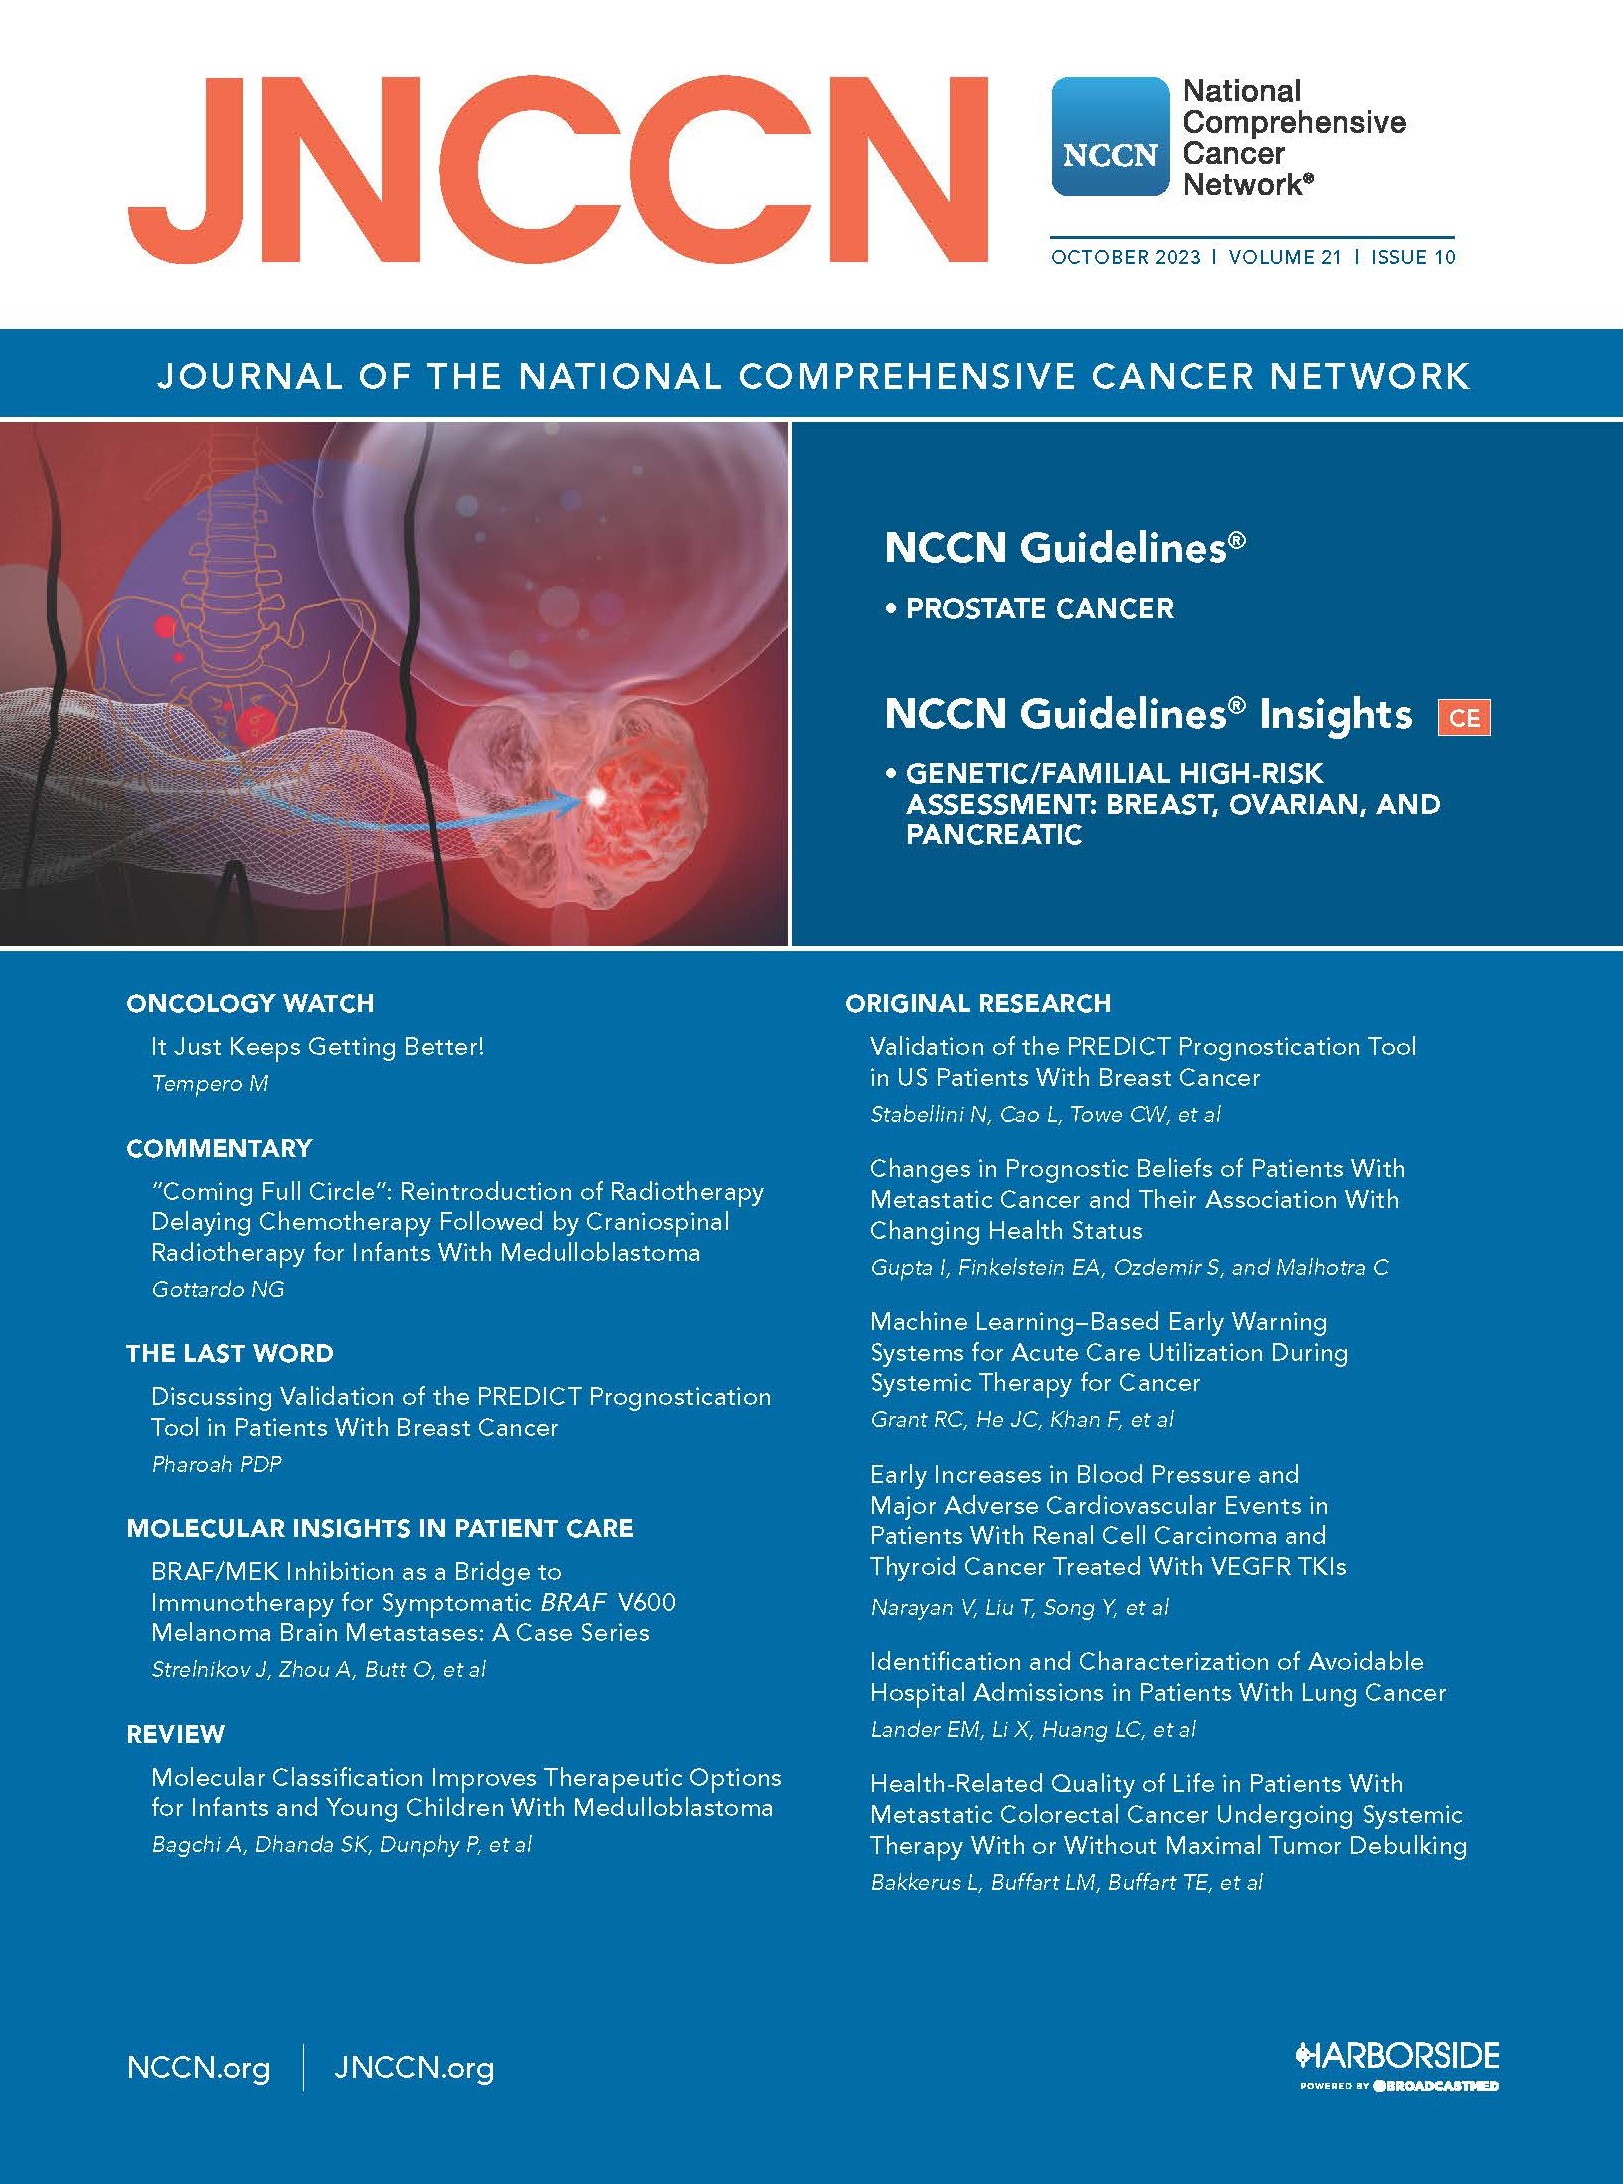 JNCCN Cover, October 2023